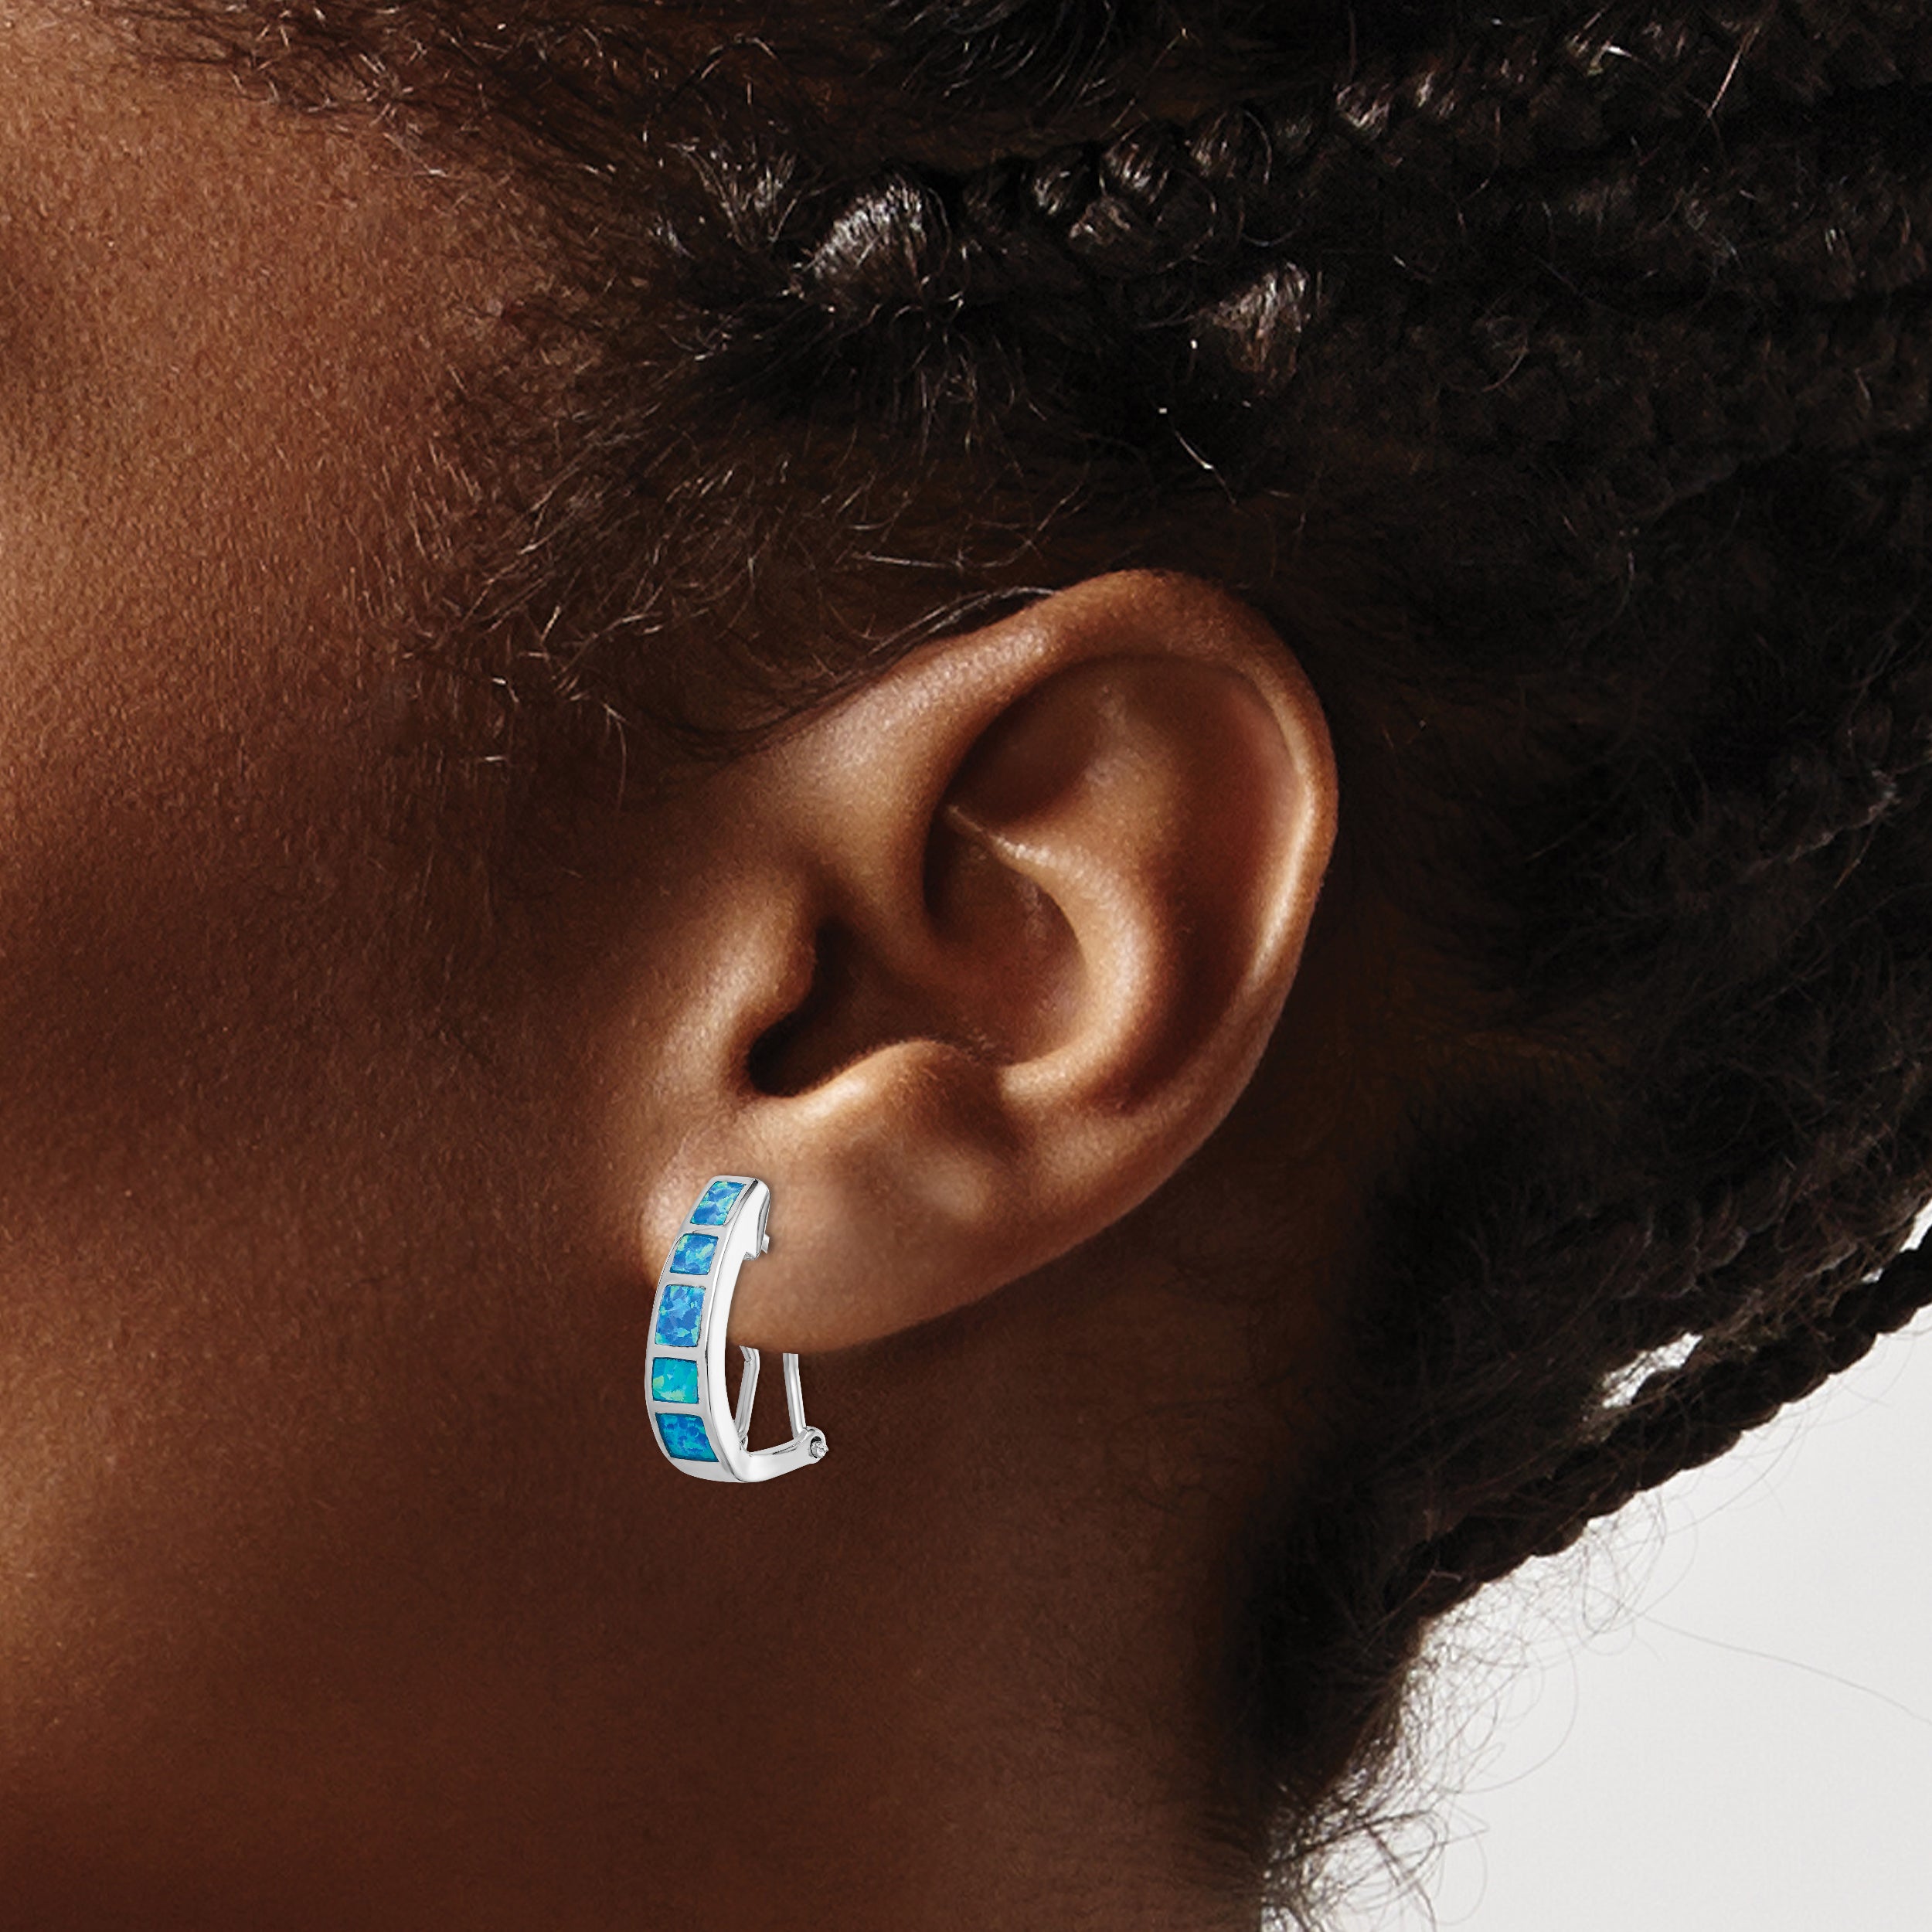 Sterling Silver RH-plated Polished Blue Created Opal Inlay J-Hoop Earrings